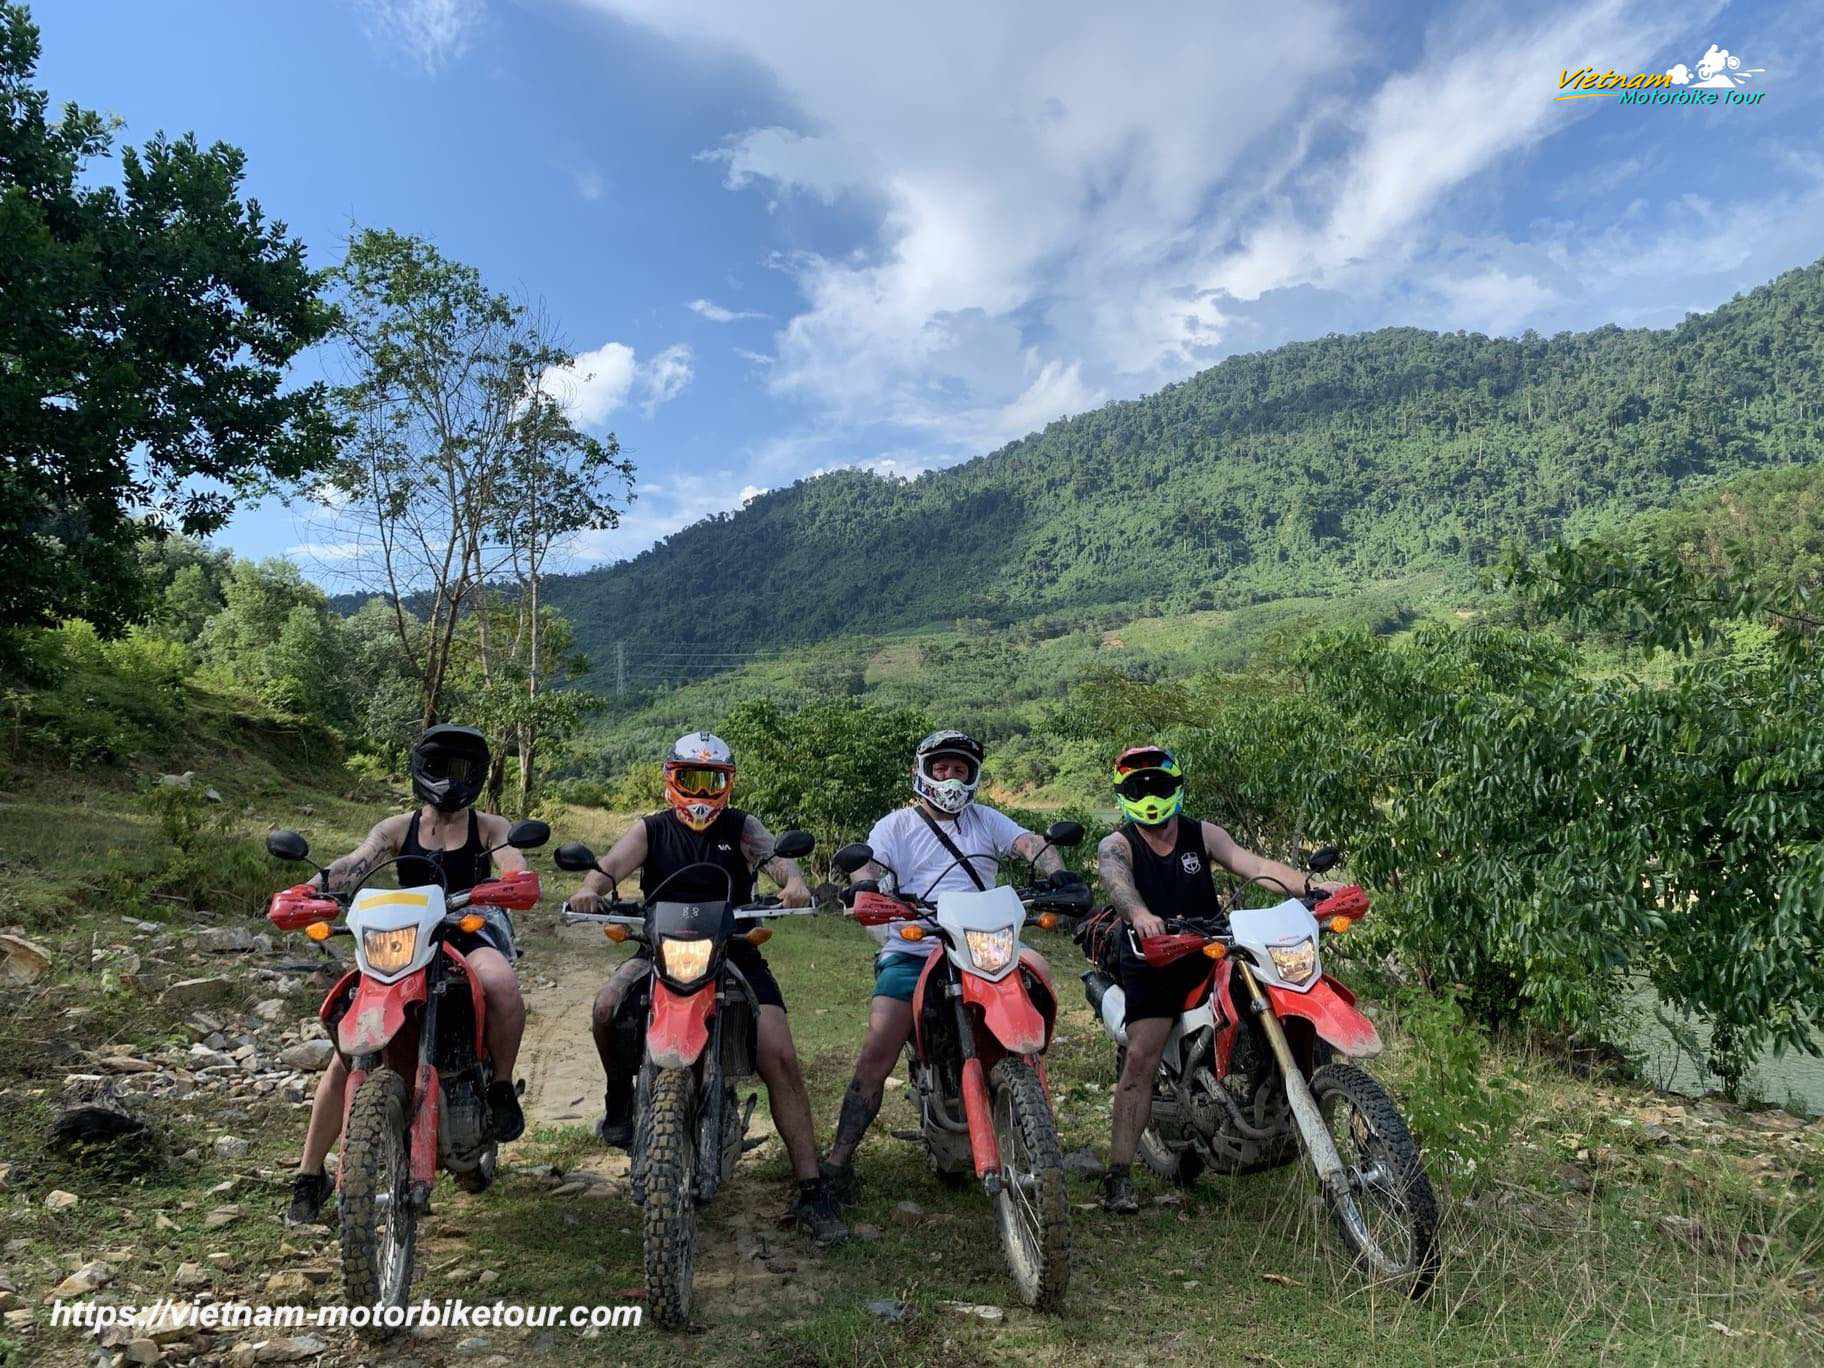 vietnam motorcycle tour to kon tum lak lake 10 - Vietnam Dirt Bike Adventure Motorbike Tour from Da Nang to Saigon